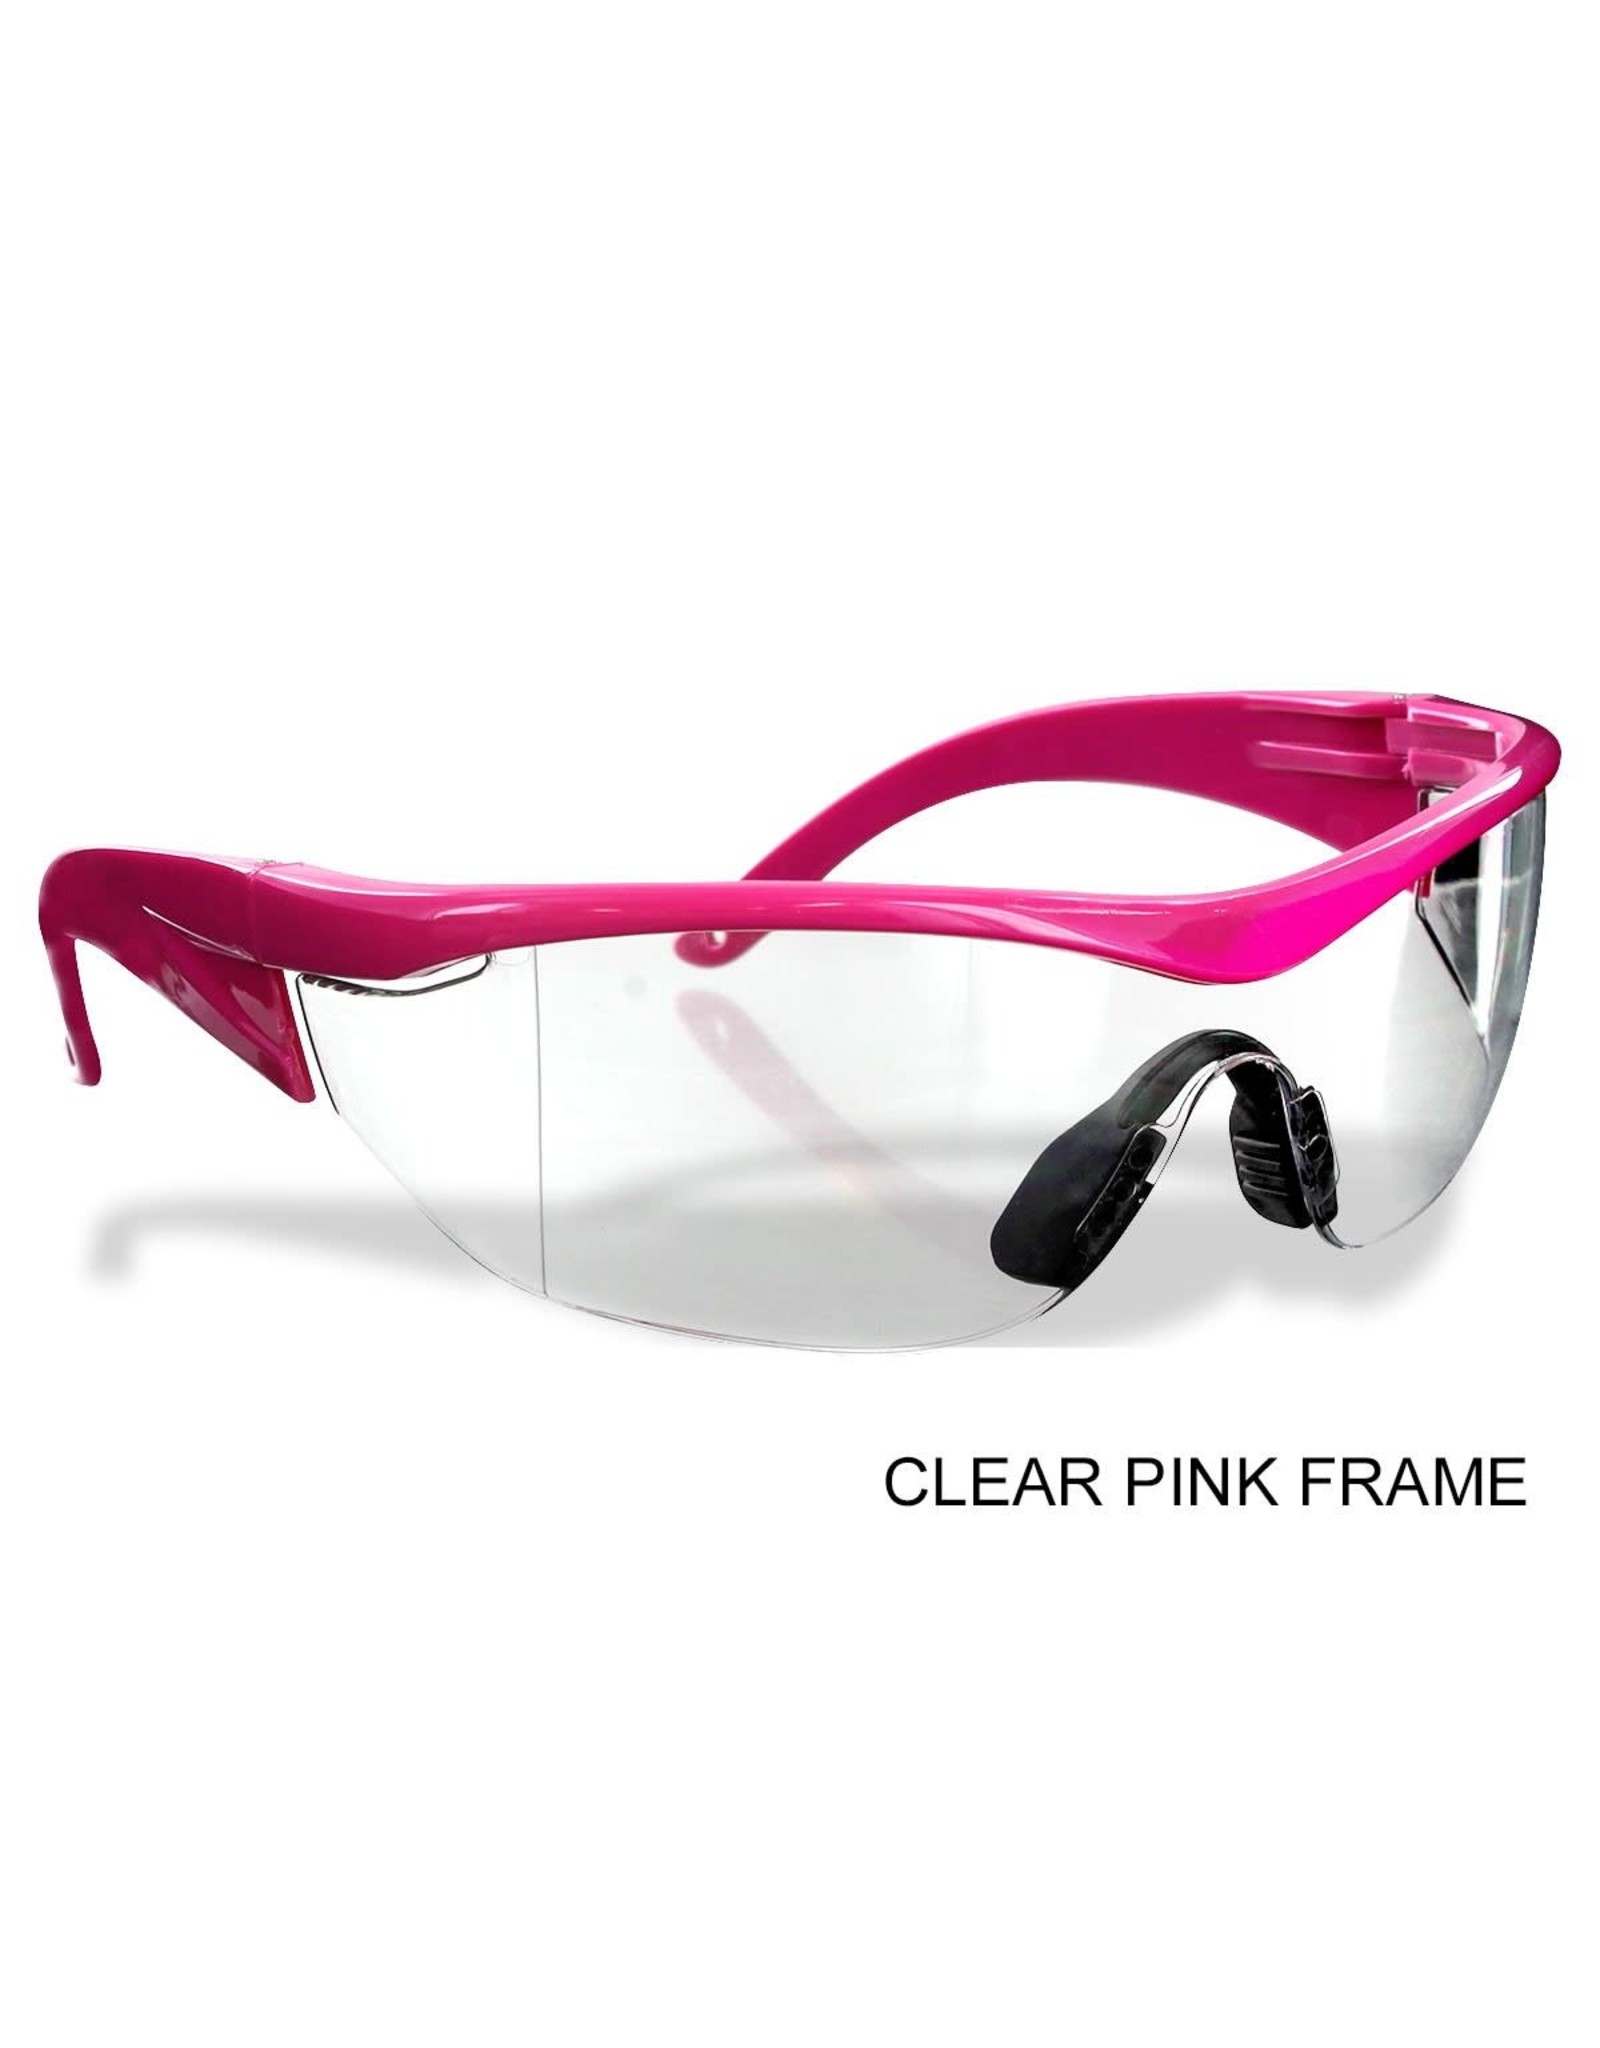 Safety Girl Navigator Glasses/Clear